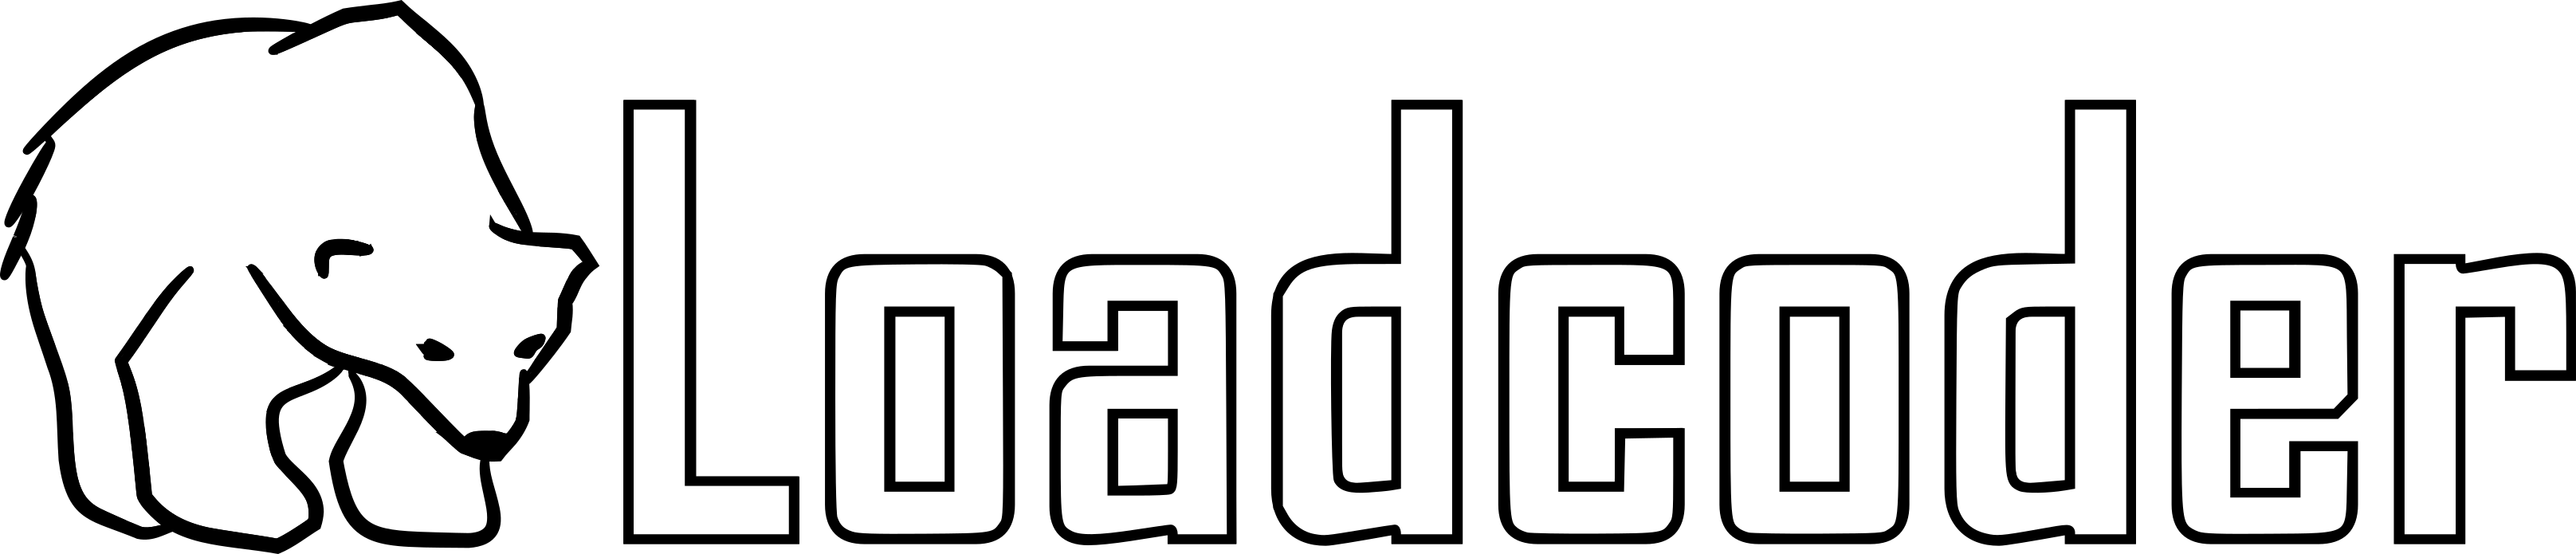 Loadcoder Head Logo